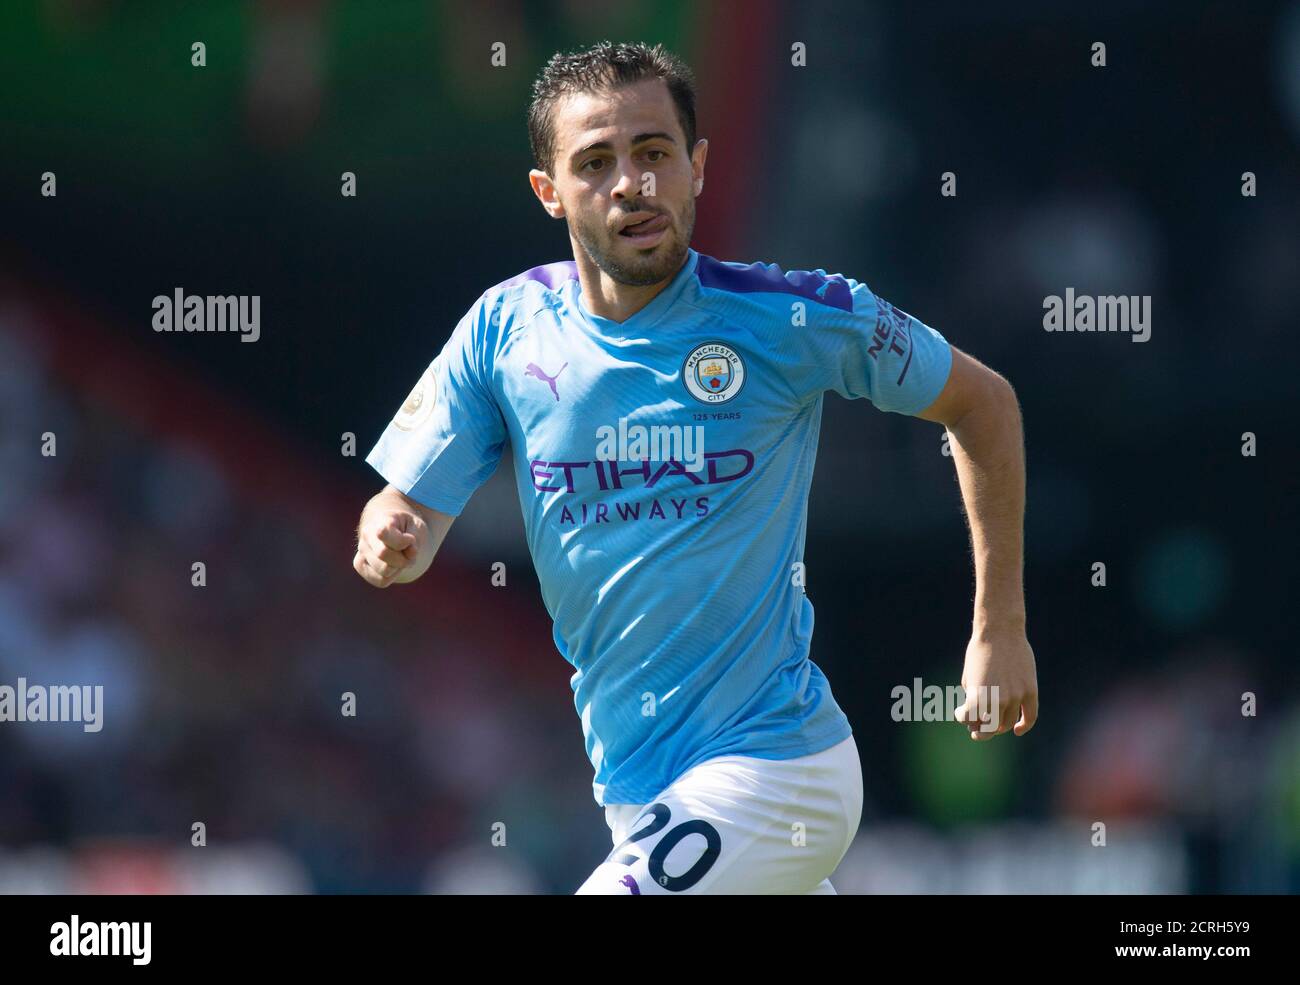 Bernardo Silva von Manchester City. BILDNACHWEIS : © MARK PAIN / ALAMY STOCK FOTO Stockfoto